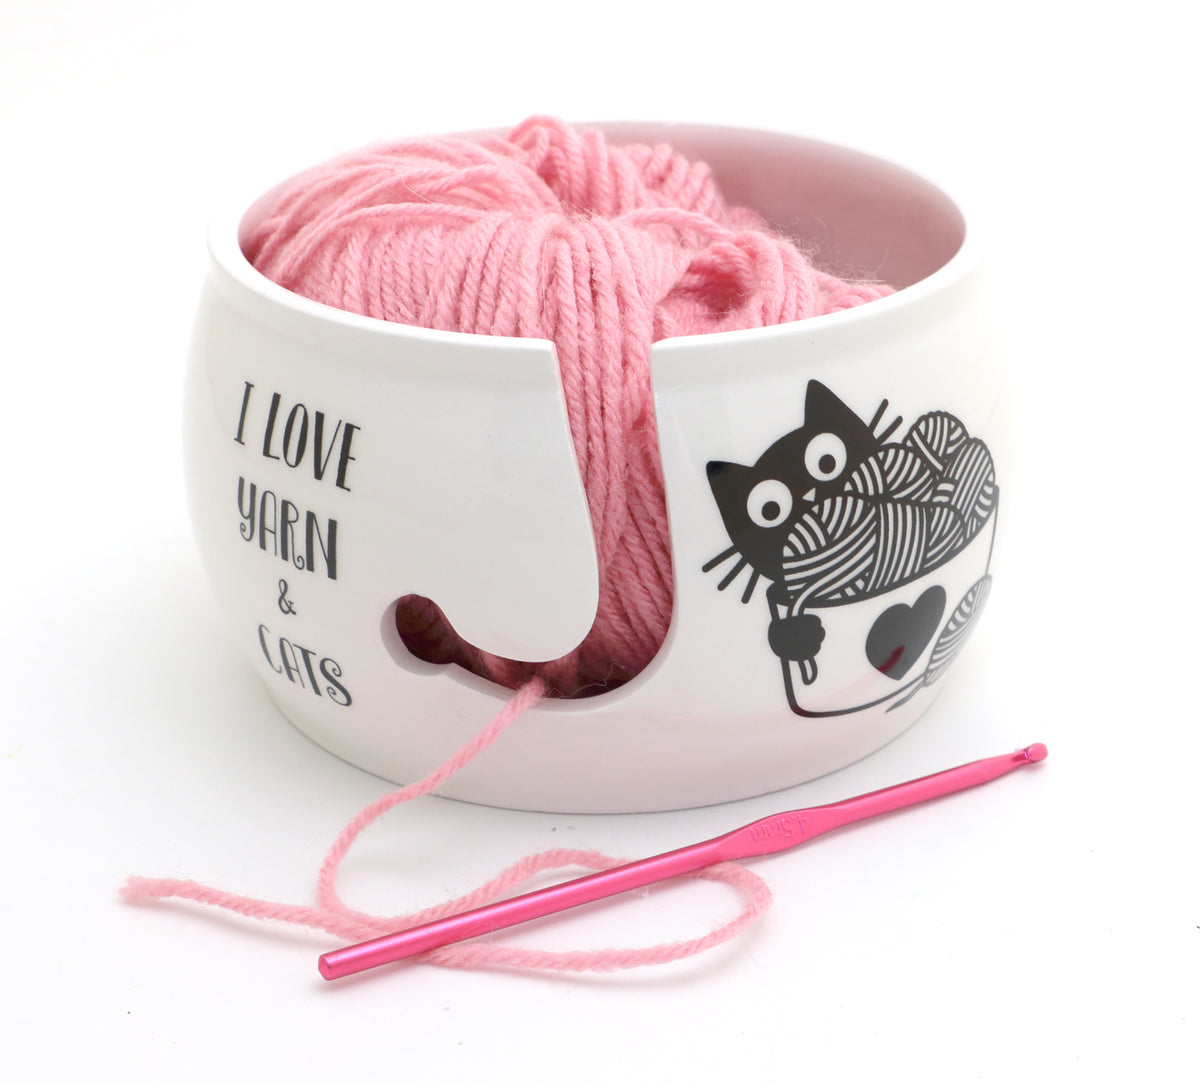 calico cat yarn bowl